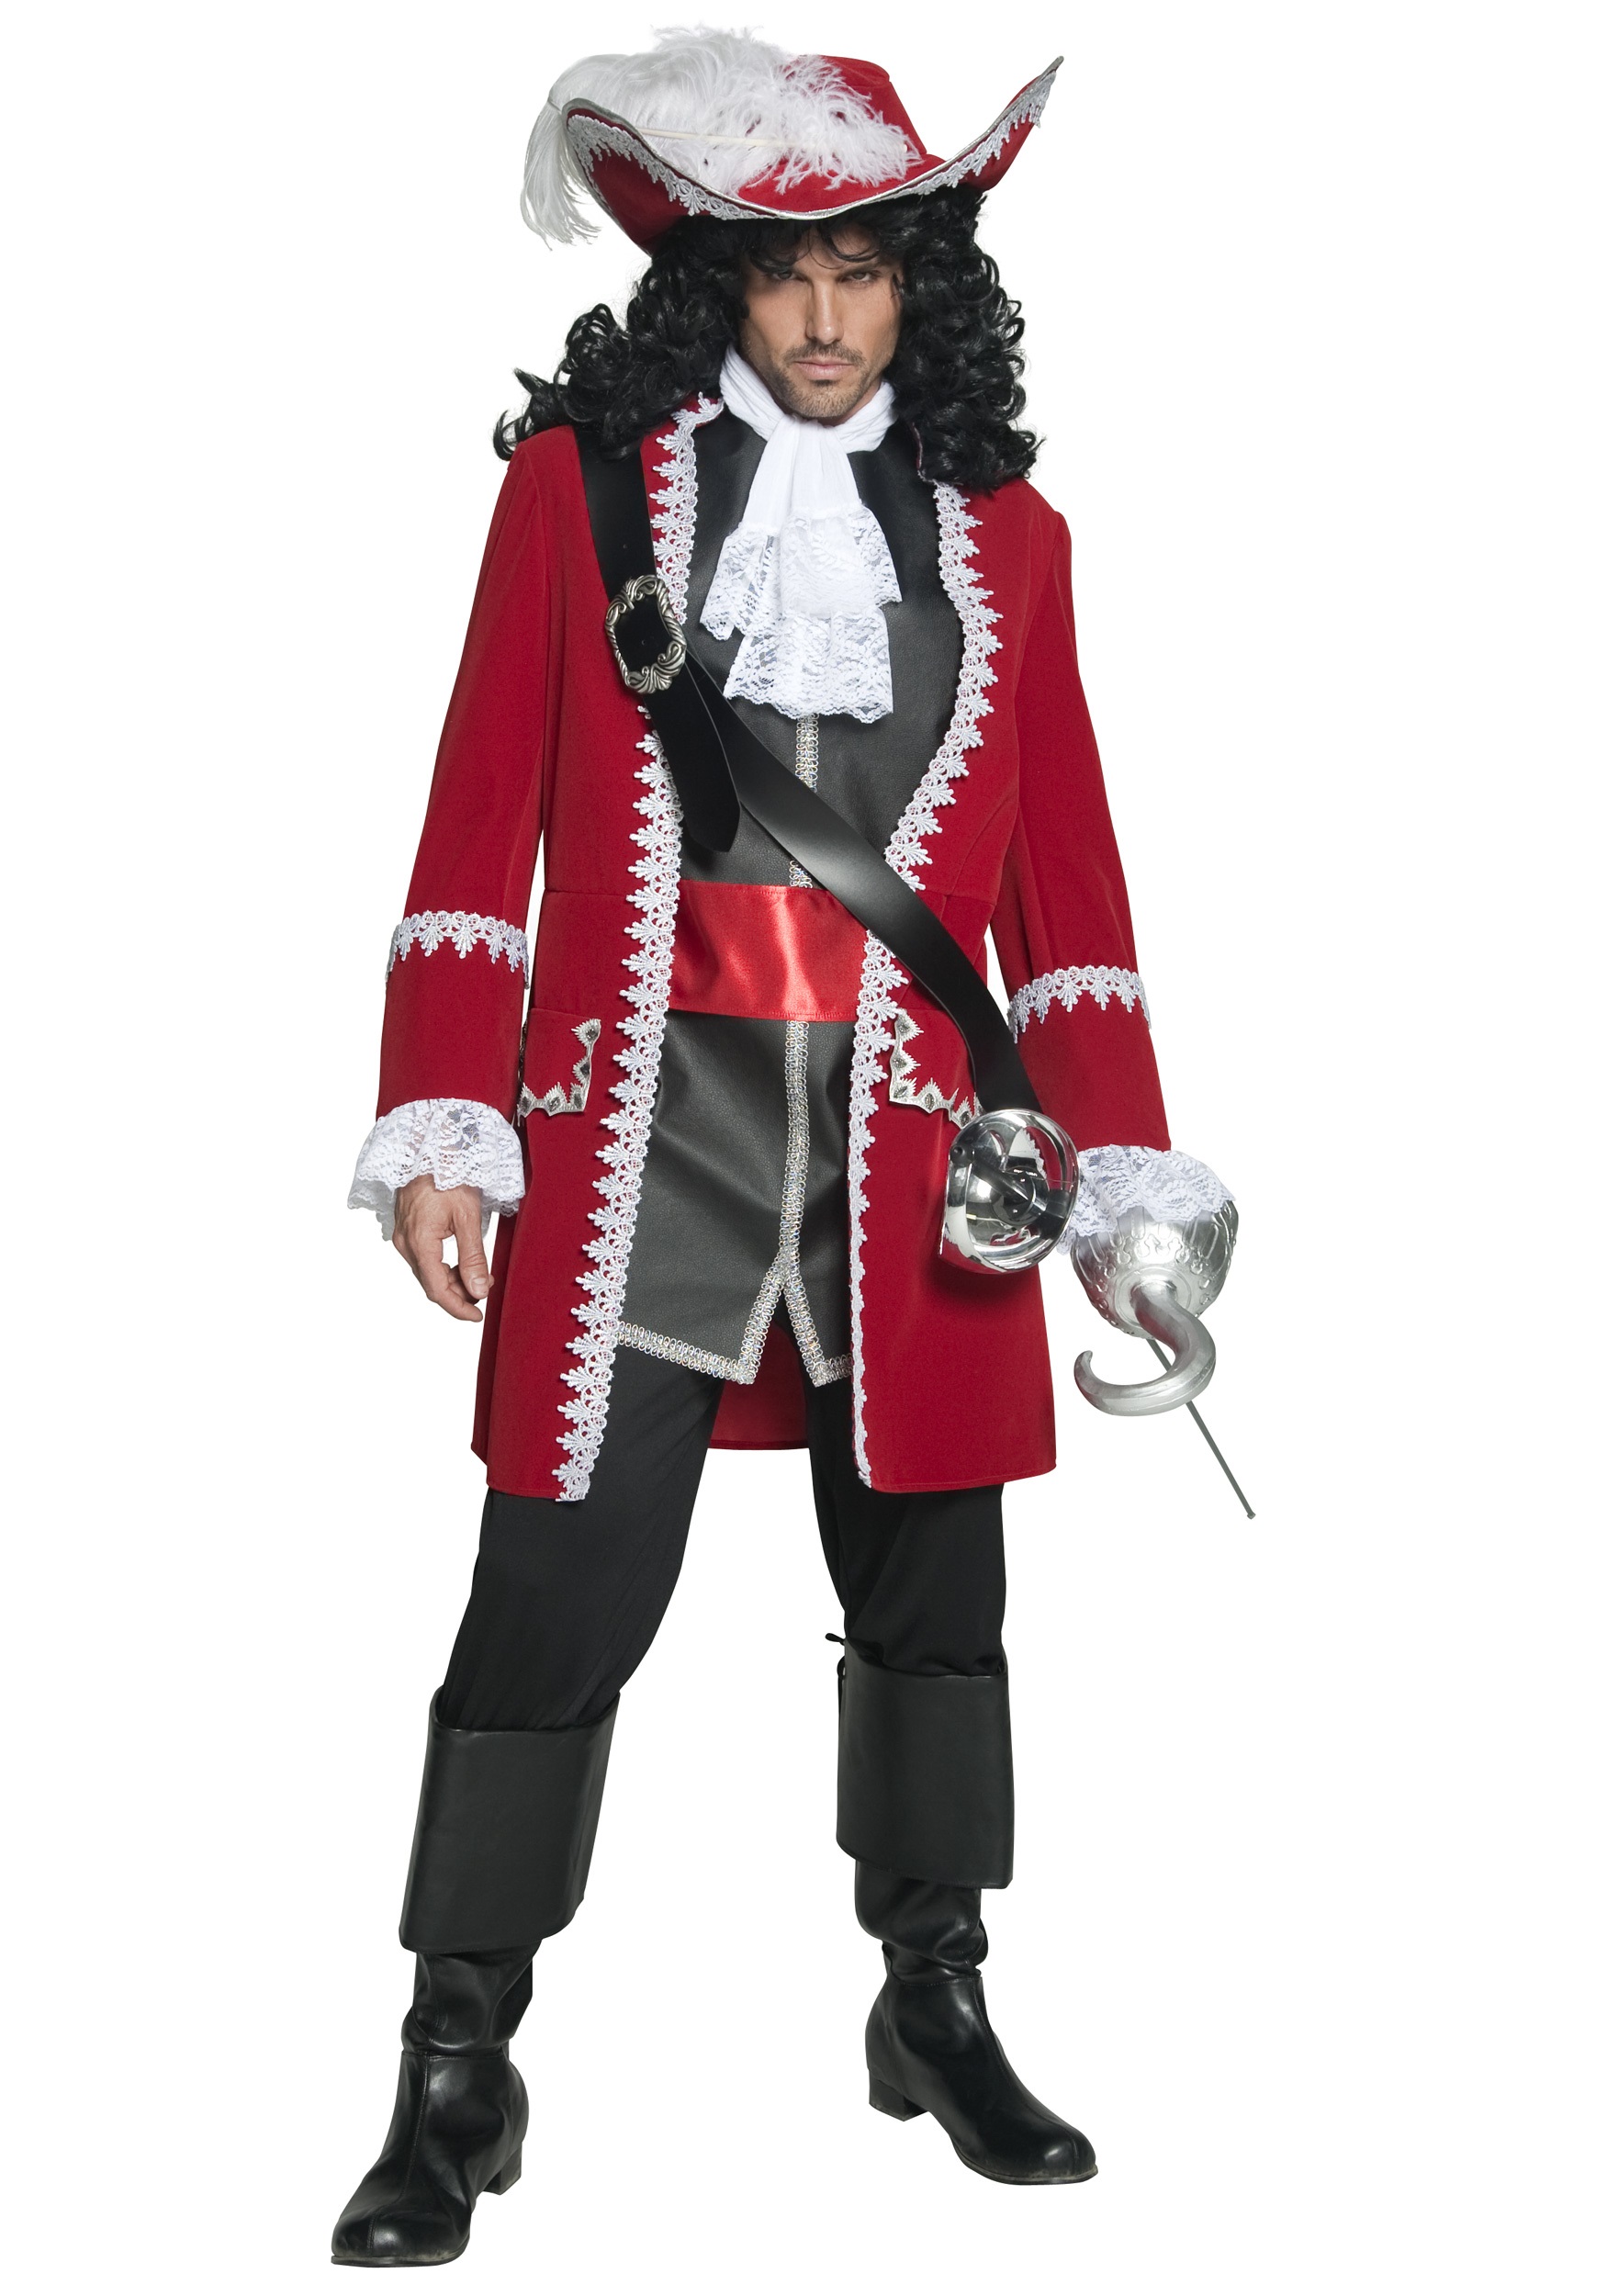 https://images.halloweencostumes.com/products/10233/1-1/mens-regal-pirate-captain-costume.jpg